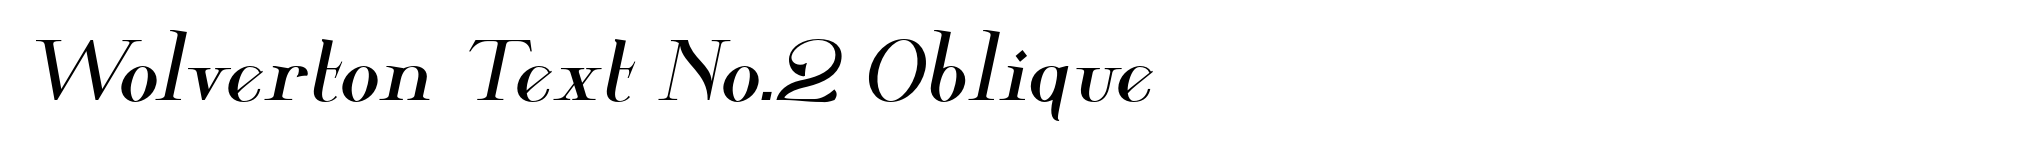 Wolverton Text No.2 Oblique image